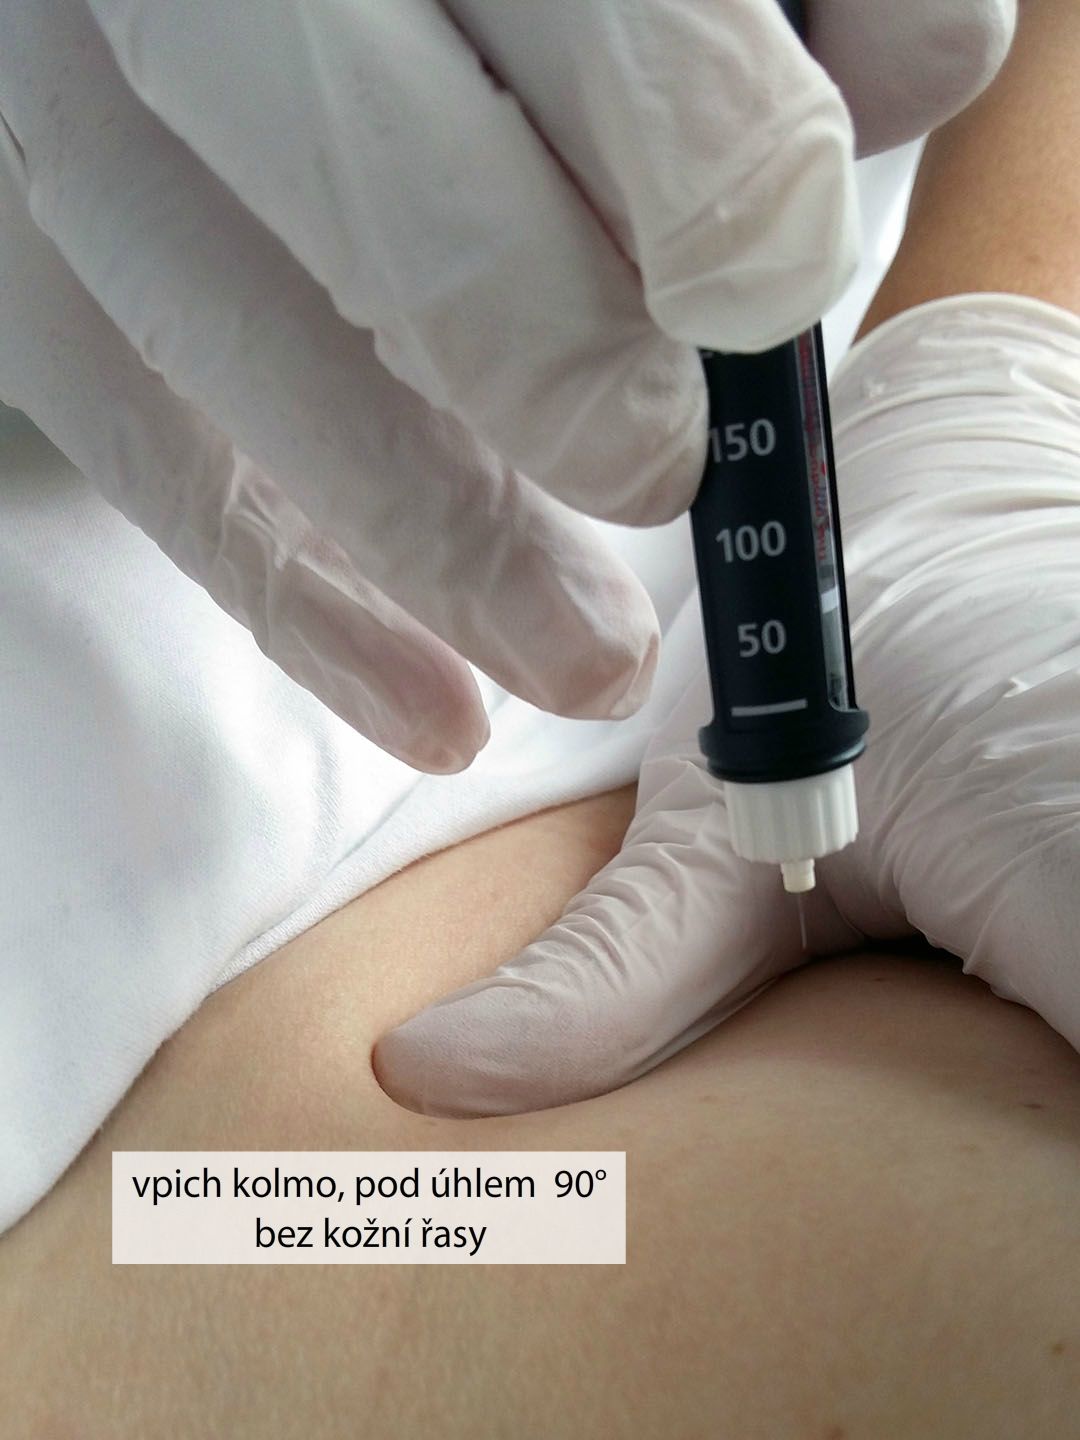 Aplikace s.c. injekce inzulinovým perem do břicha